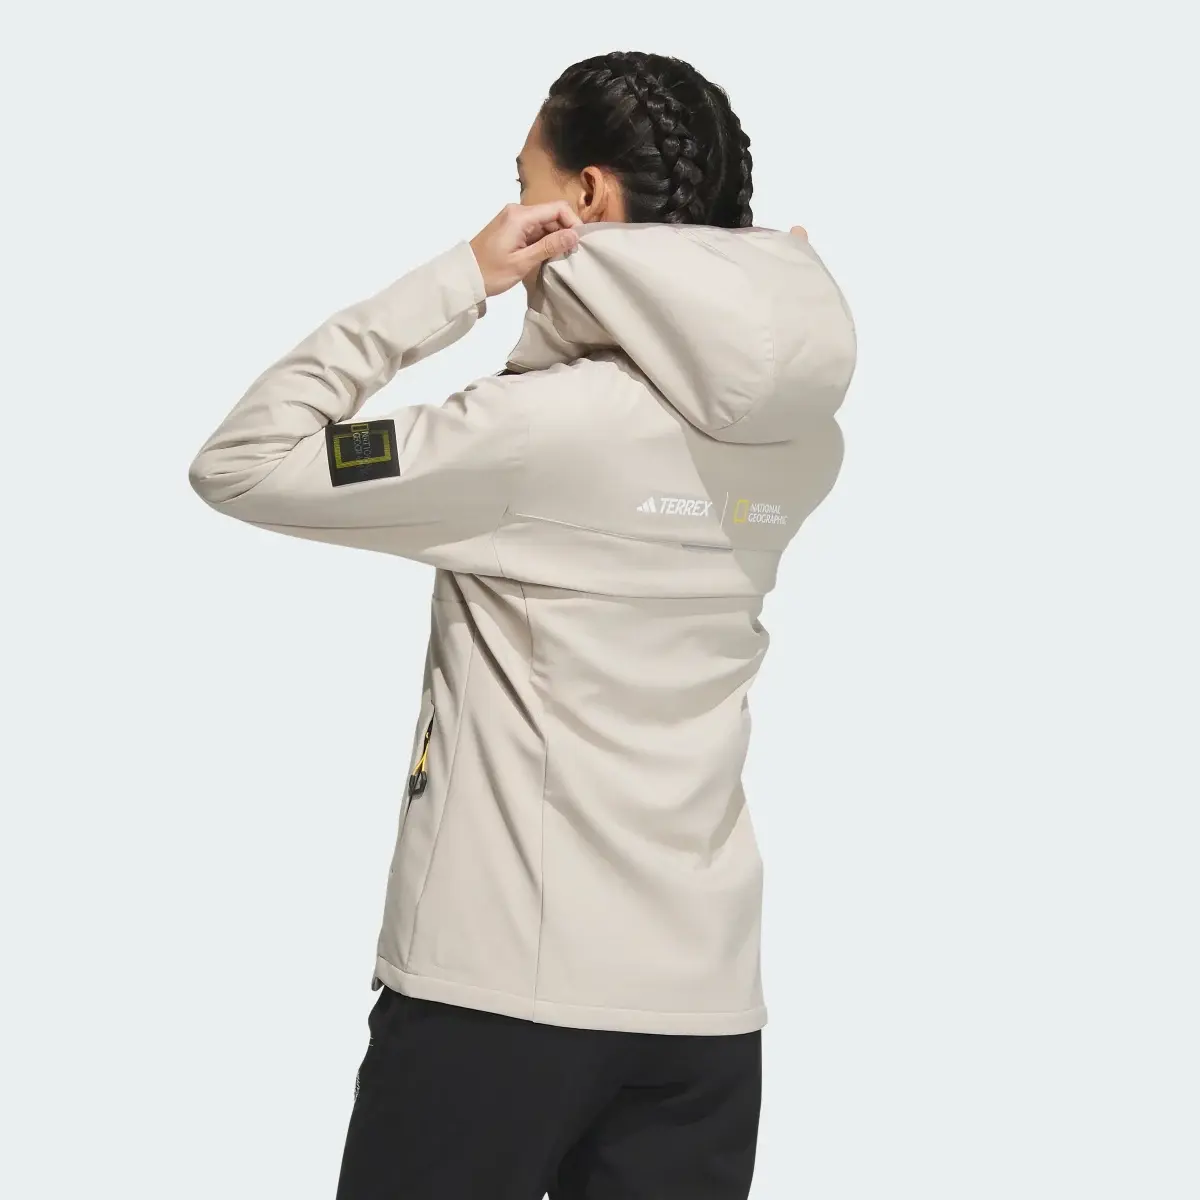 Adidas National Geographic Soft Shell Jacket. 3